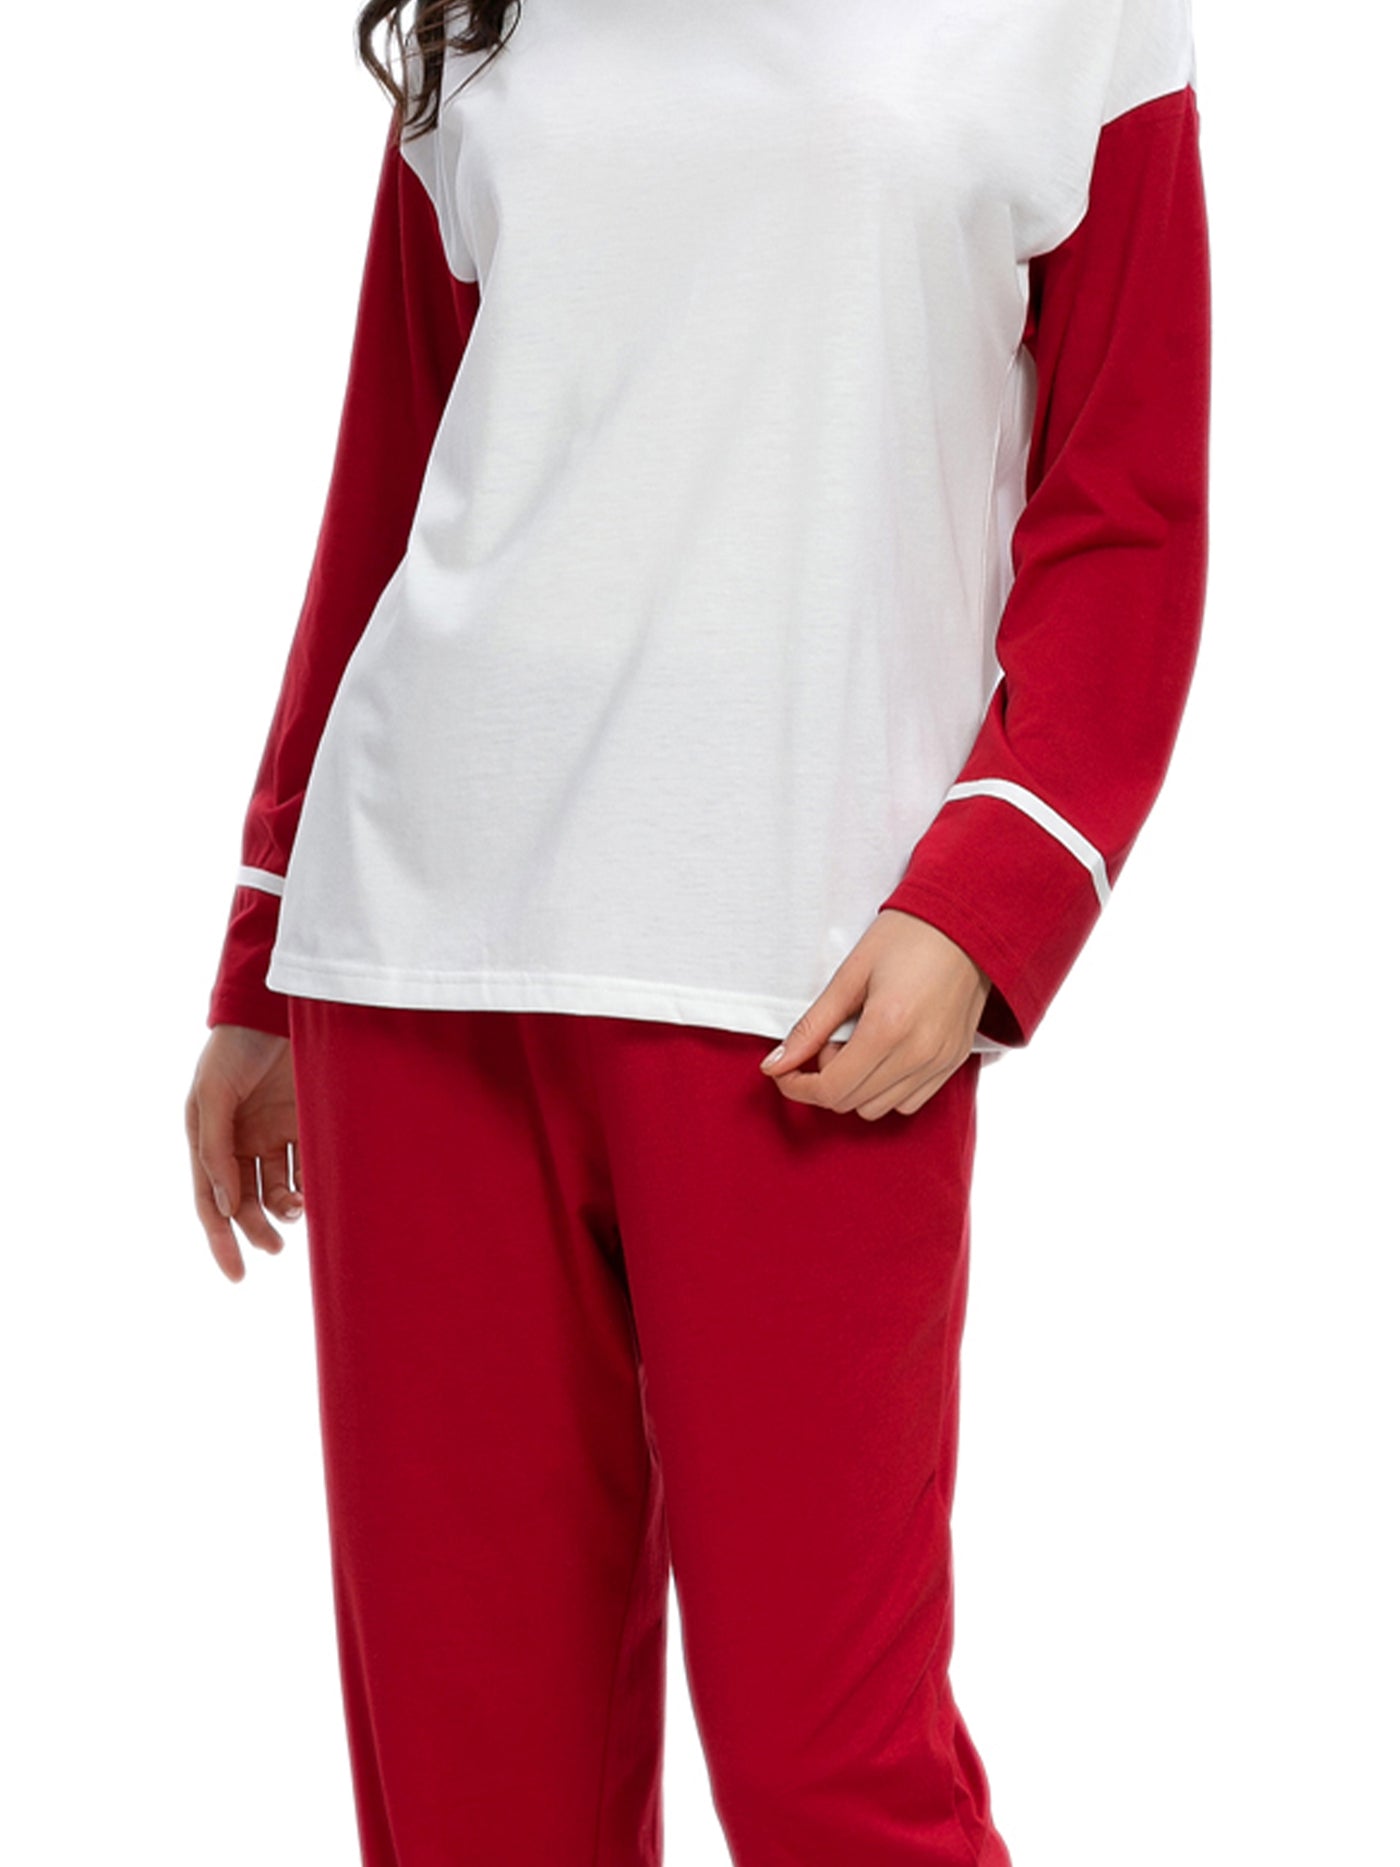 Bublédon Sleepwear Round Neck Nightwear with Pants Loungewear Pajama Set